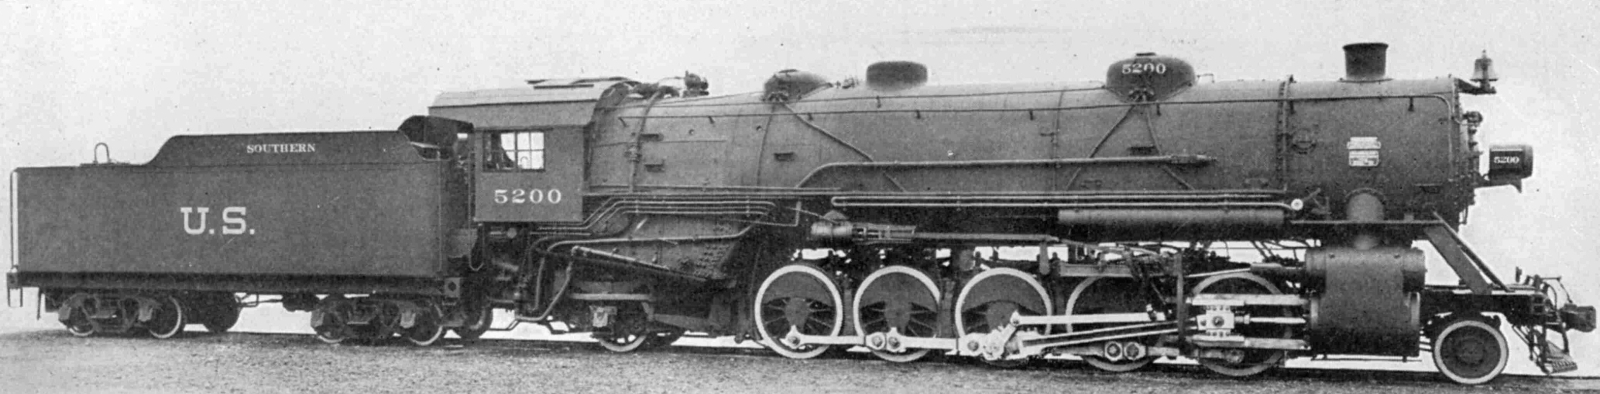 Southern Railway Ss-1 No. 5200